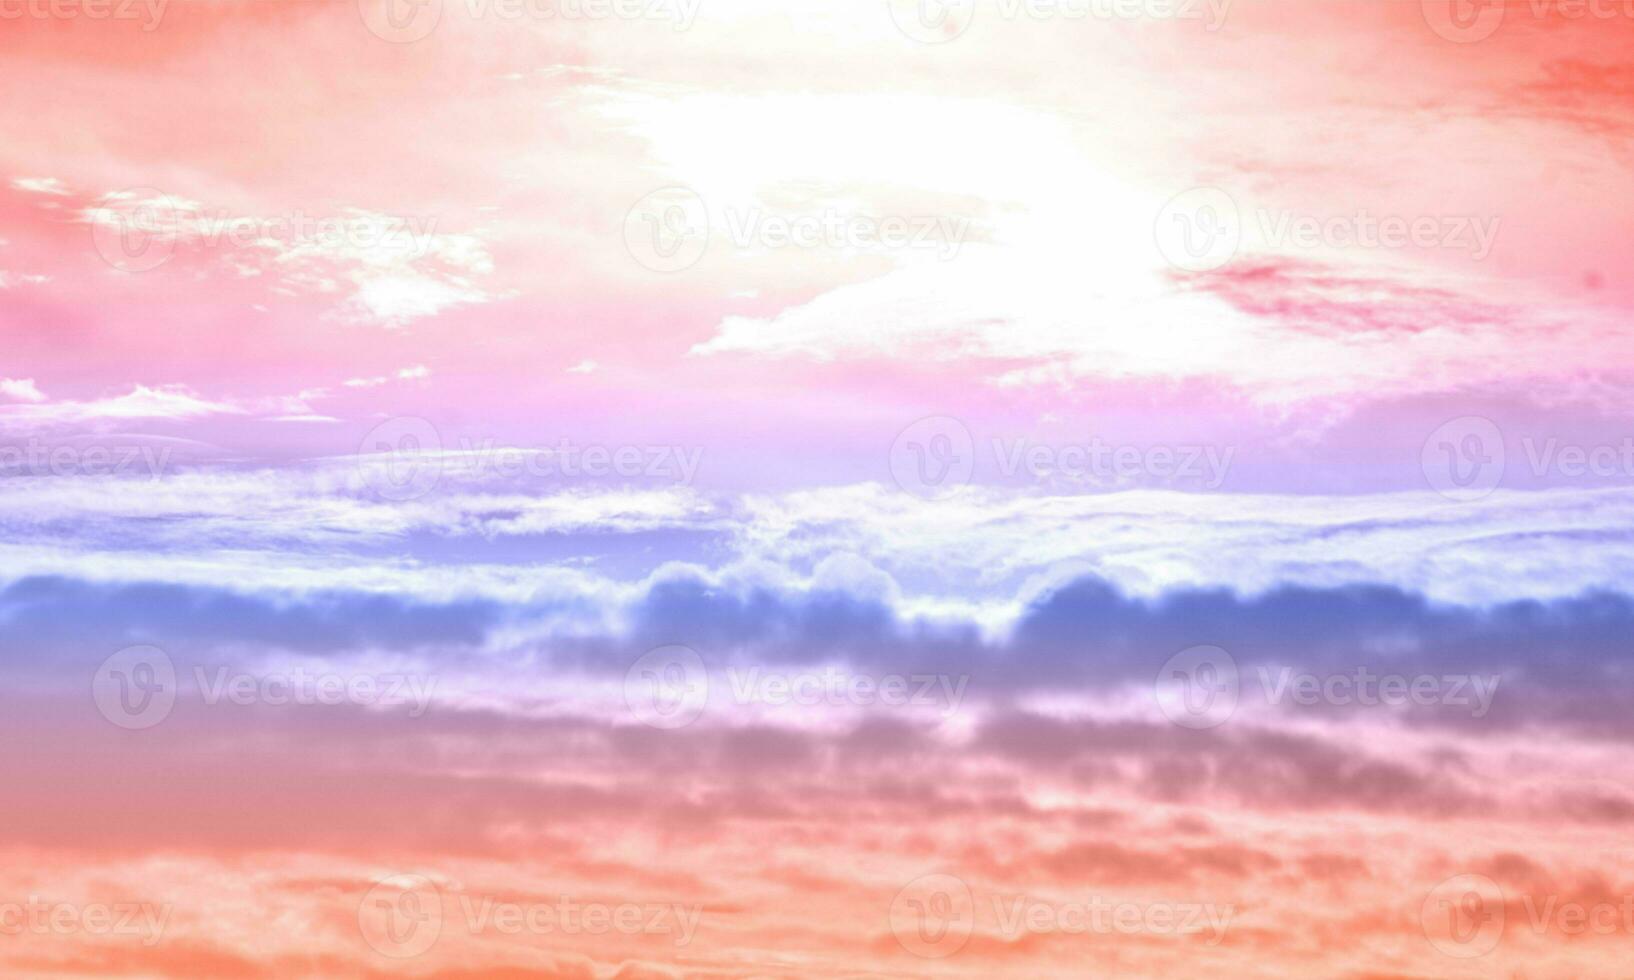 himmel bakgrund med pastell gradienter foto